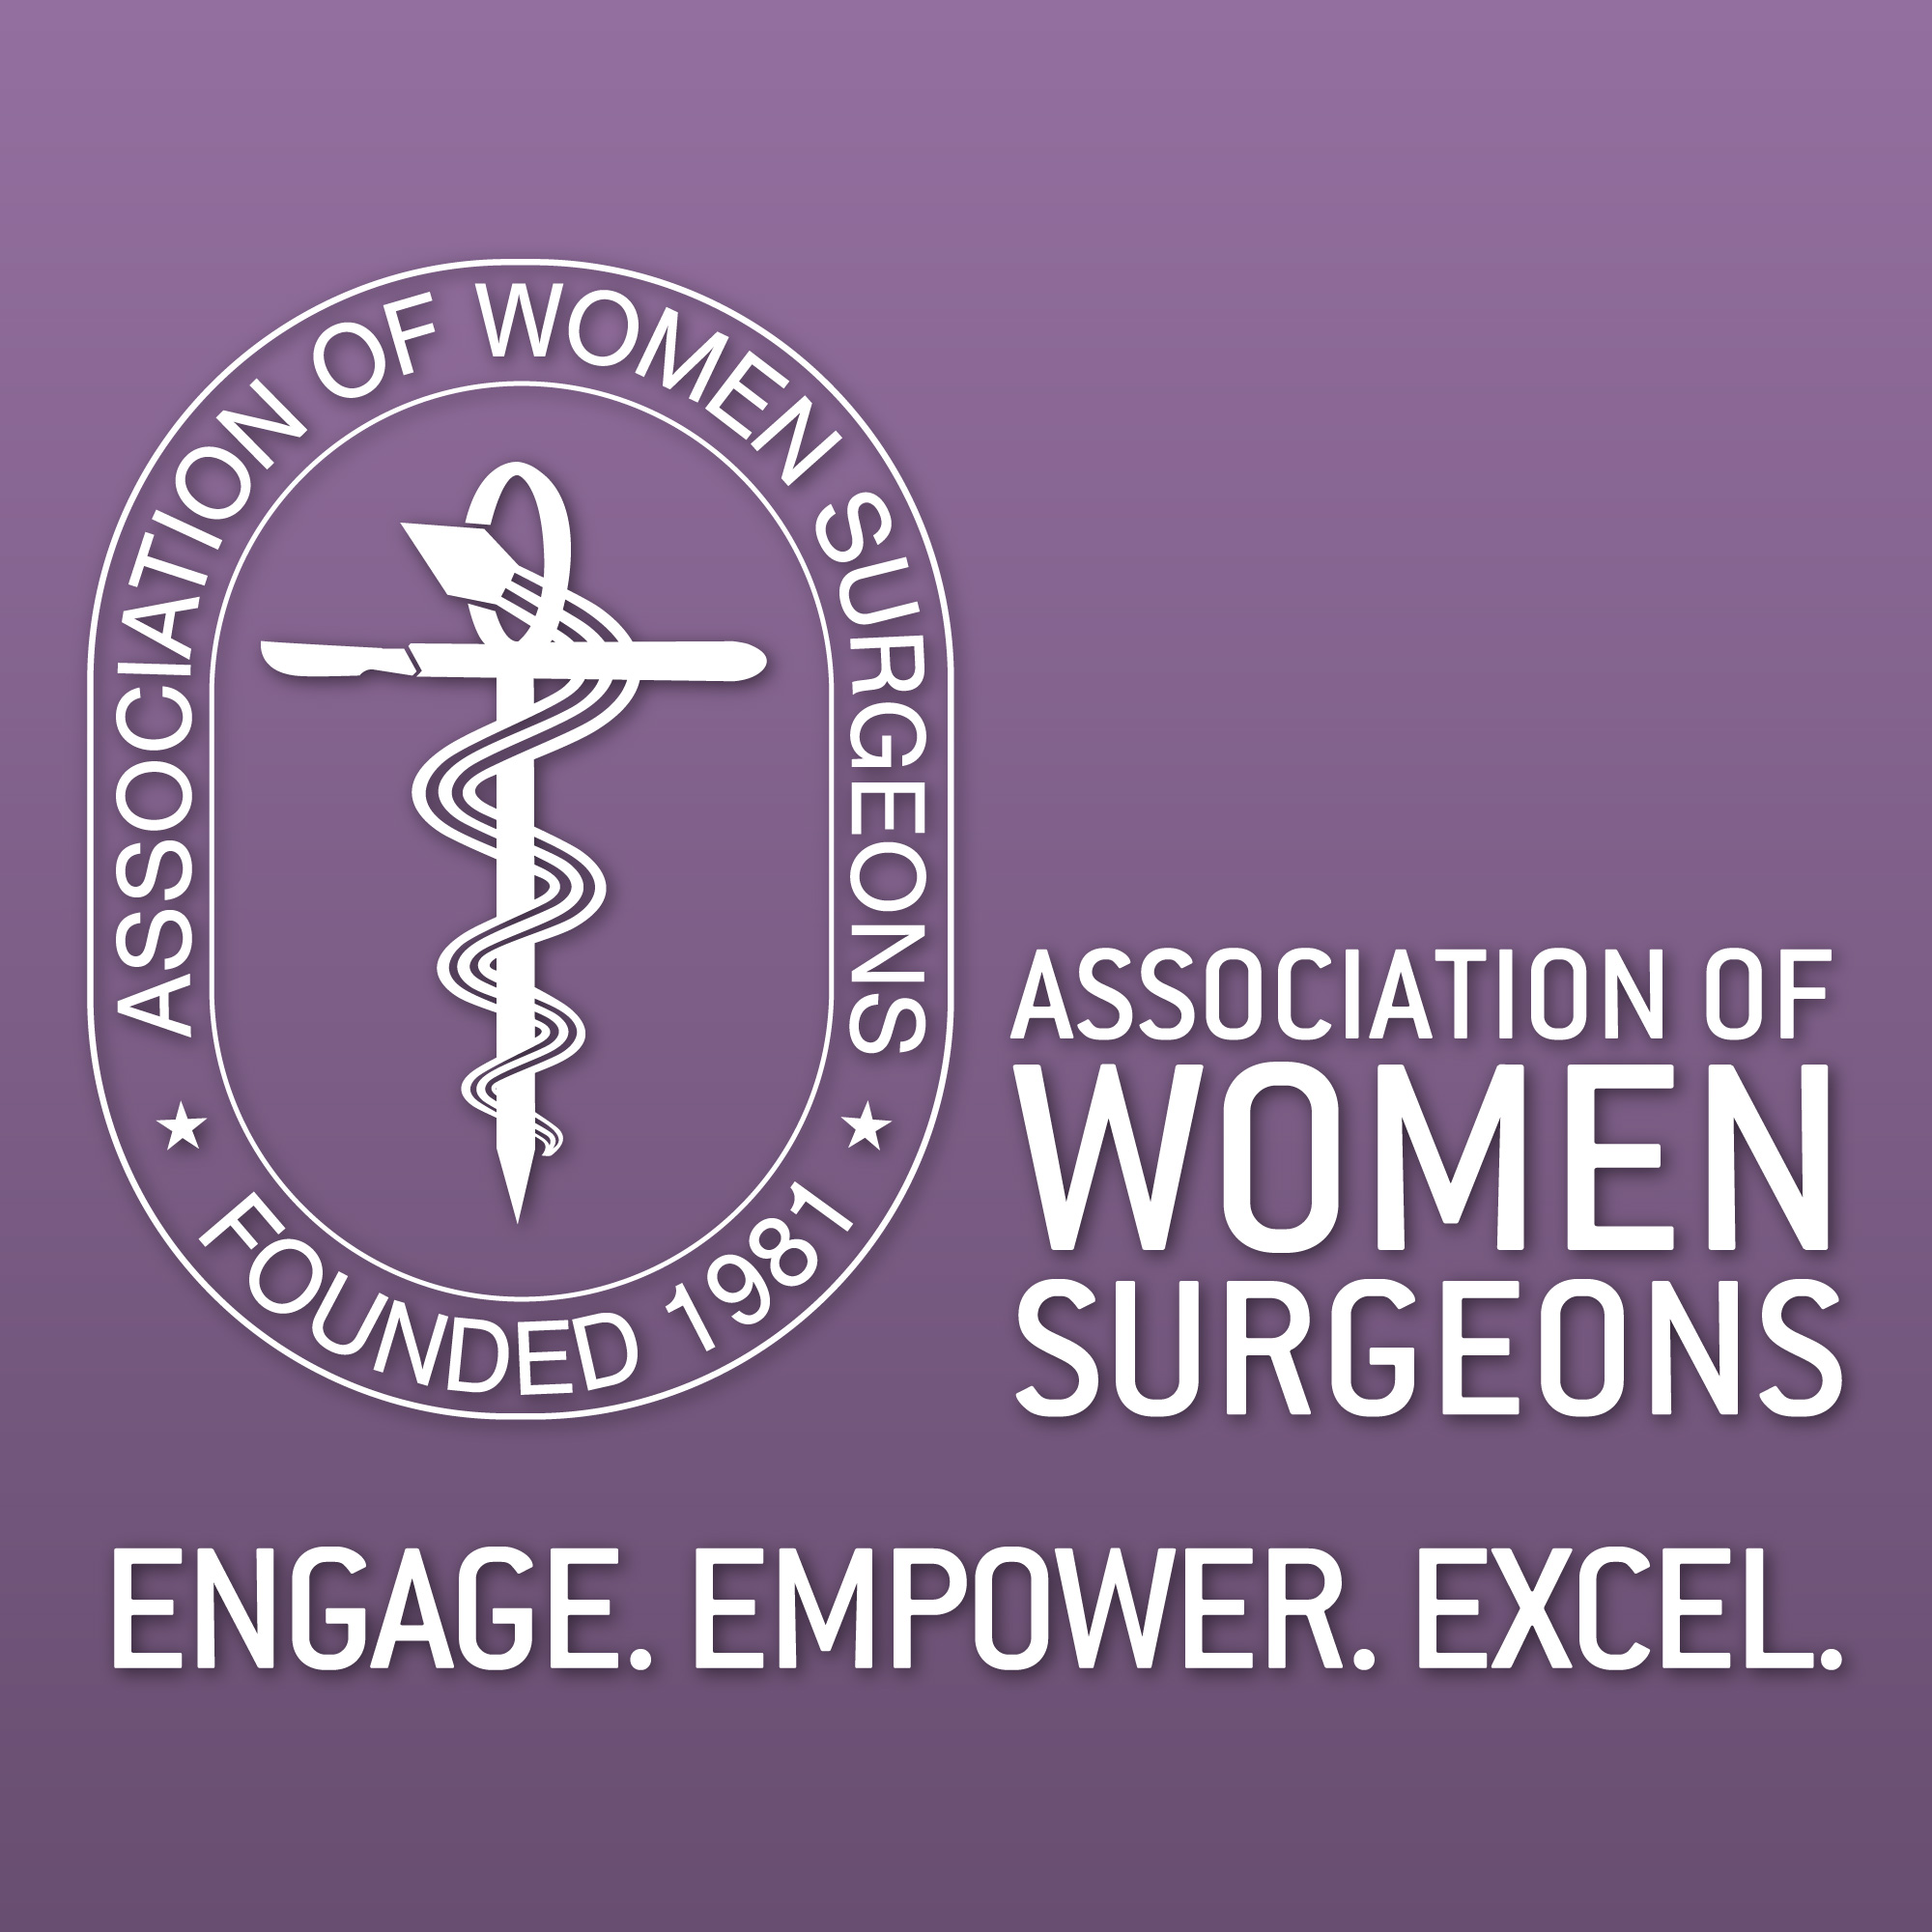 Woman Organization in Chicago Illinois - Association of Women Surgeons